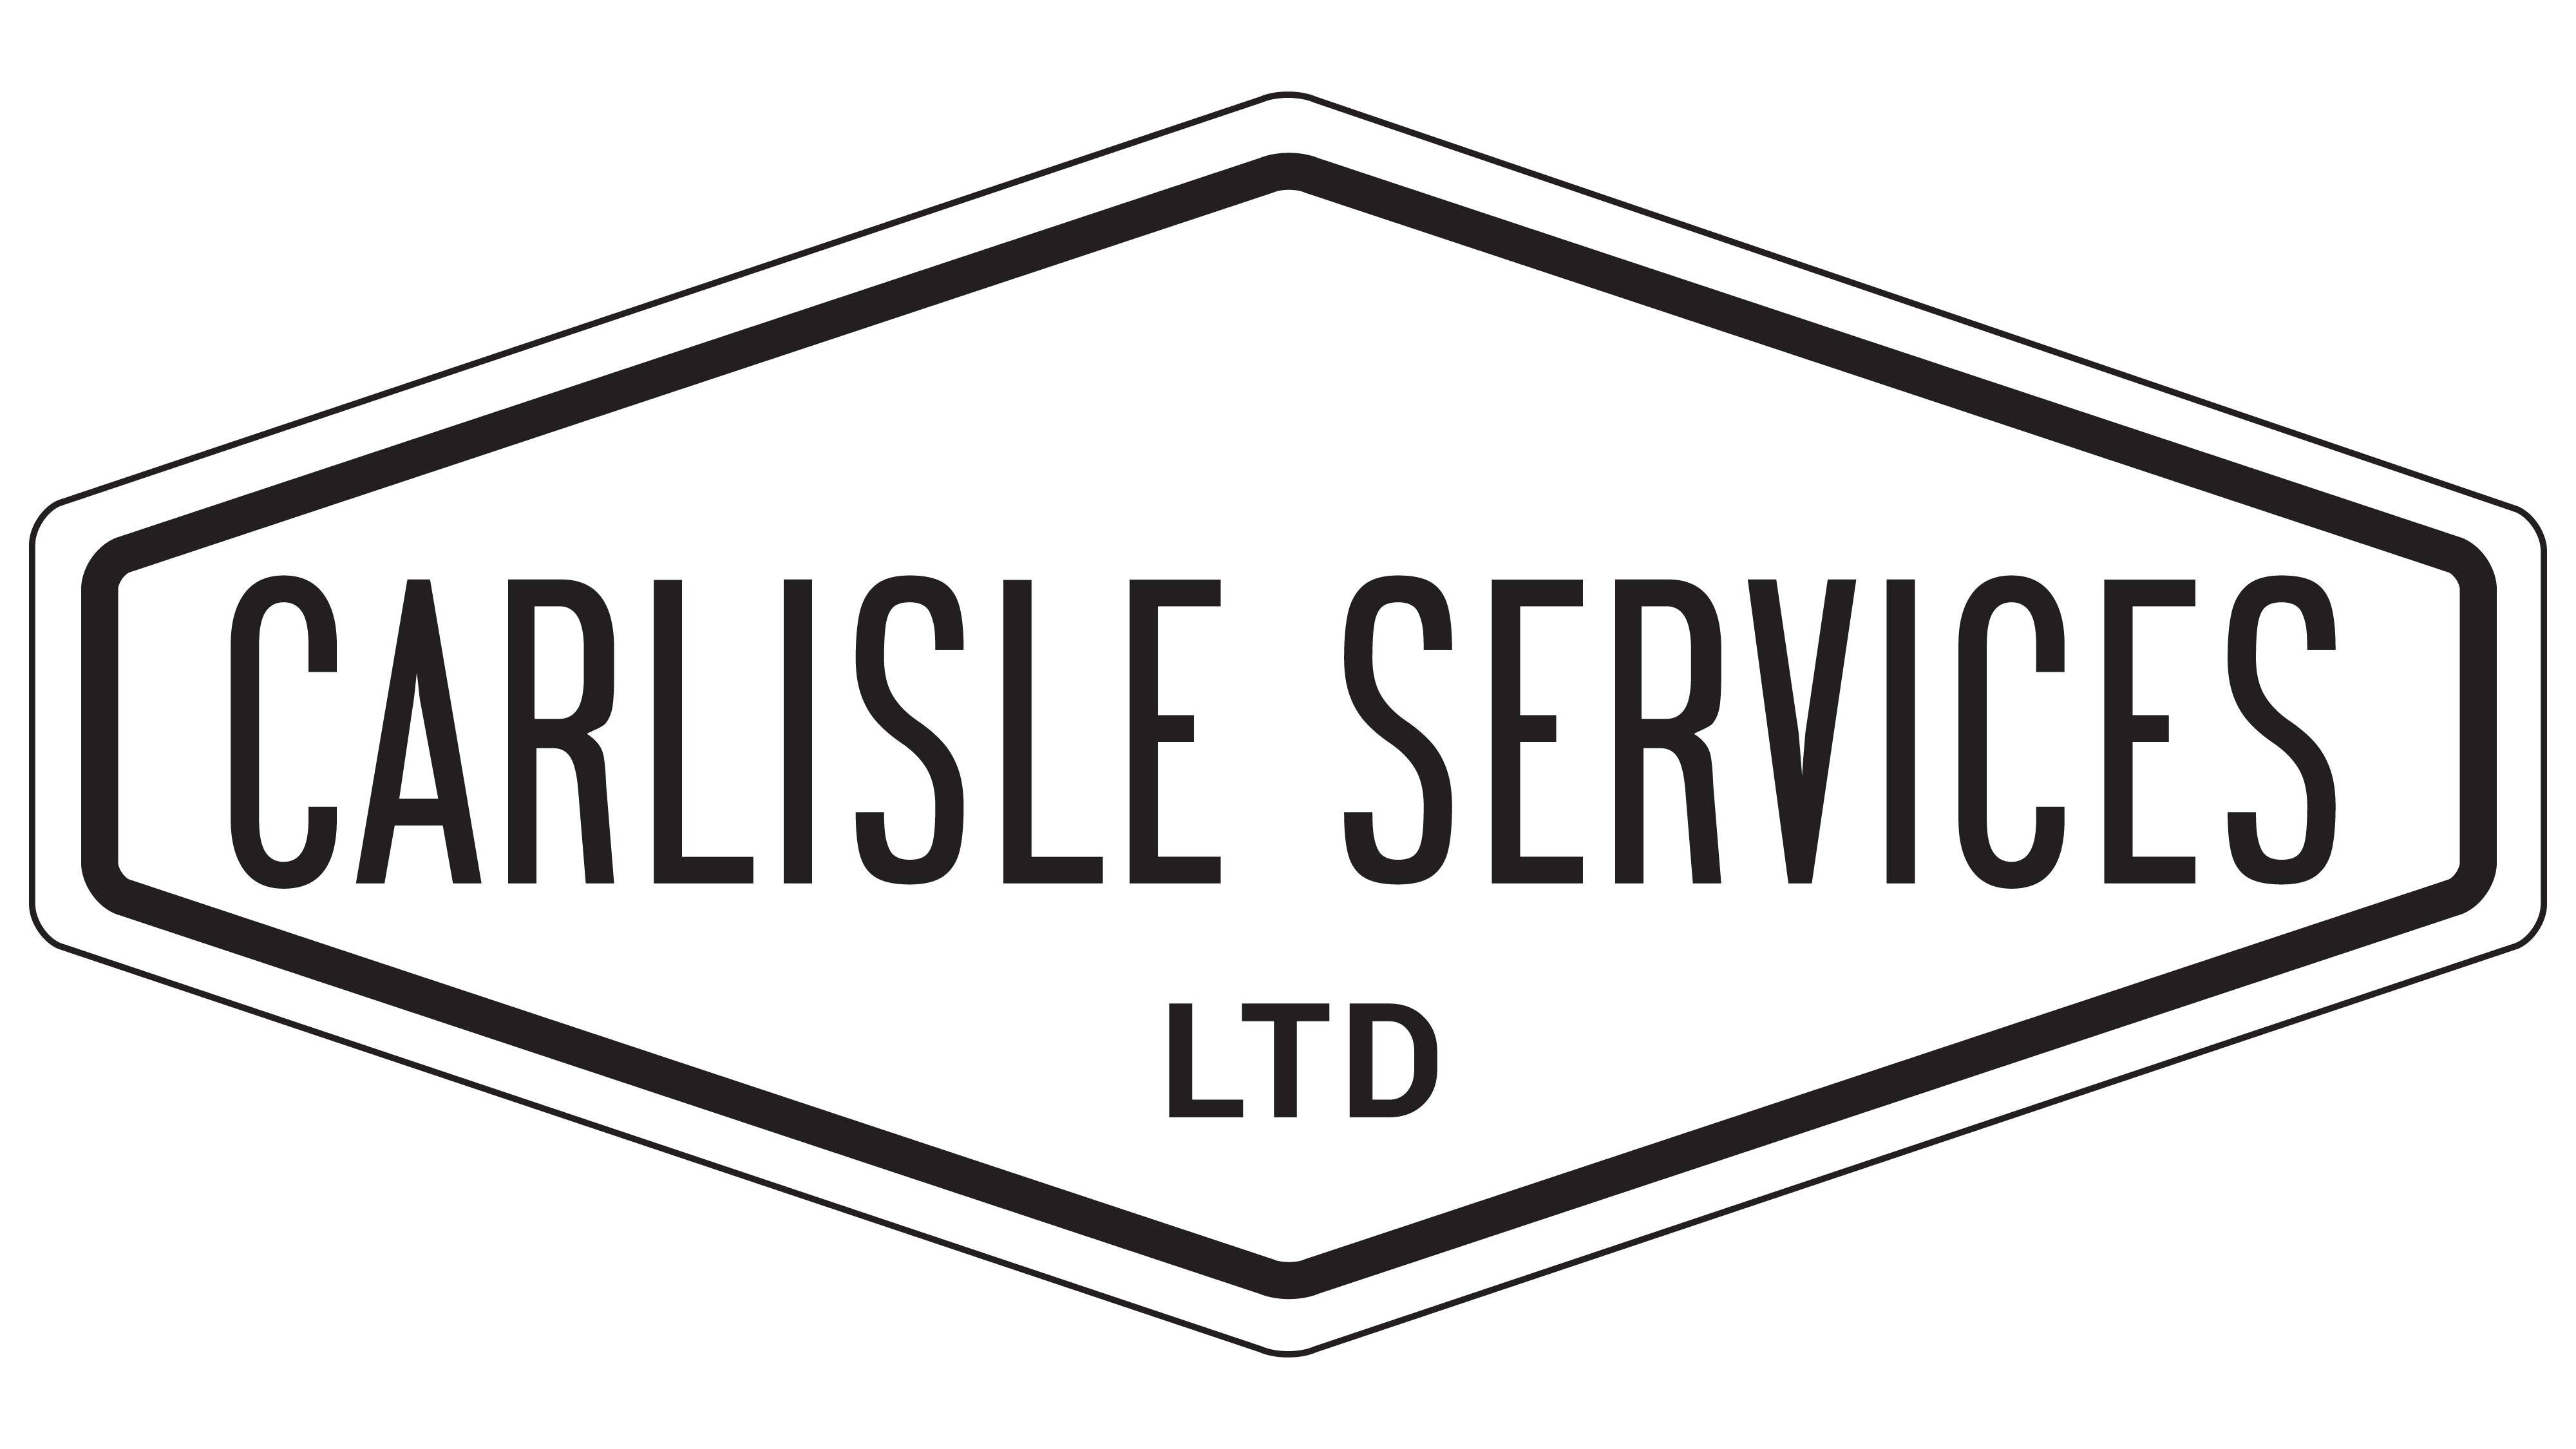 Carlisle Services Ltd.